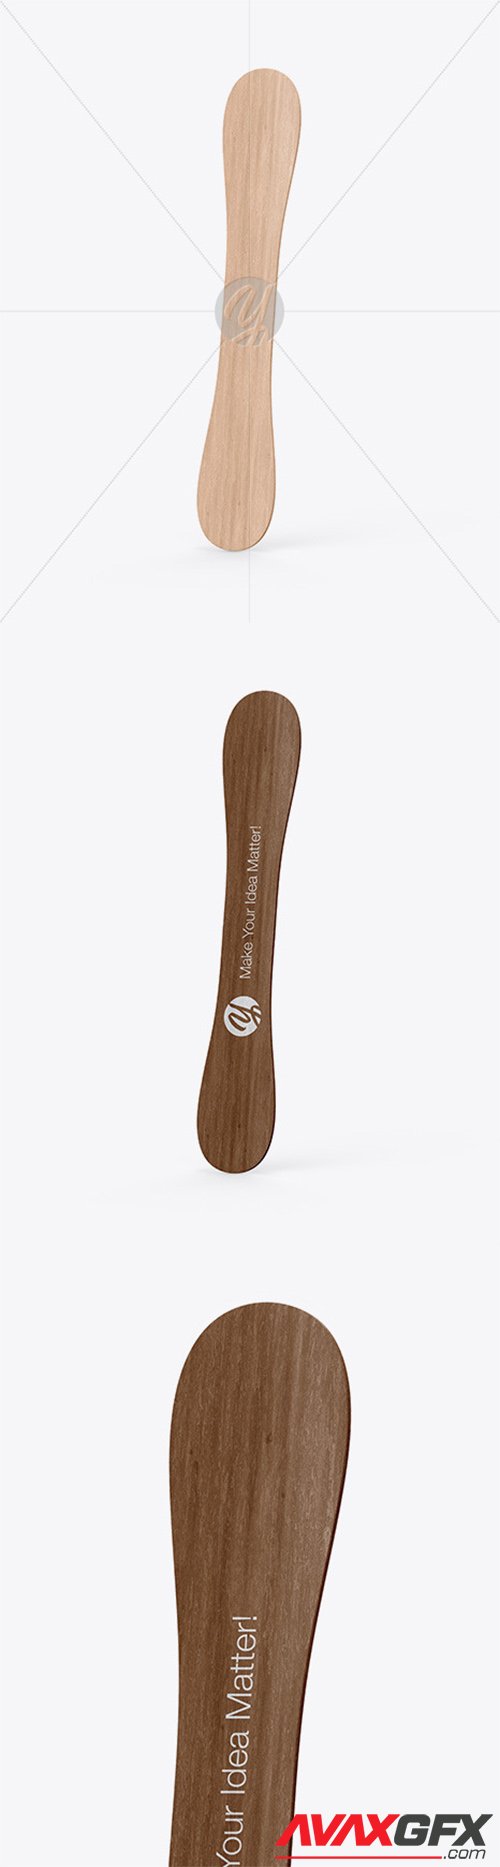 Wooden Stick Mockup 82137